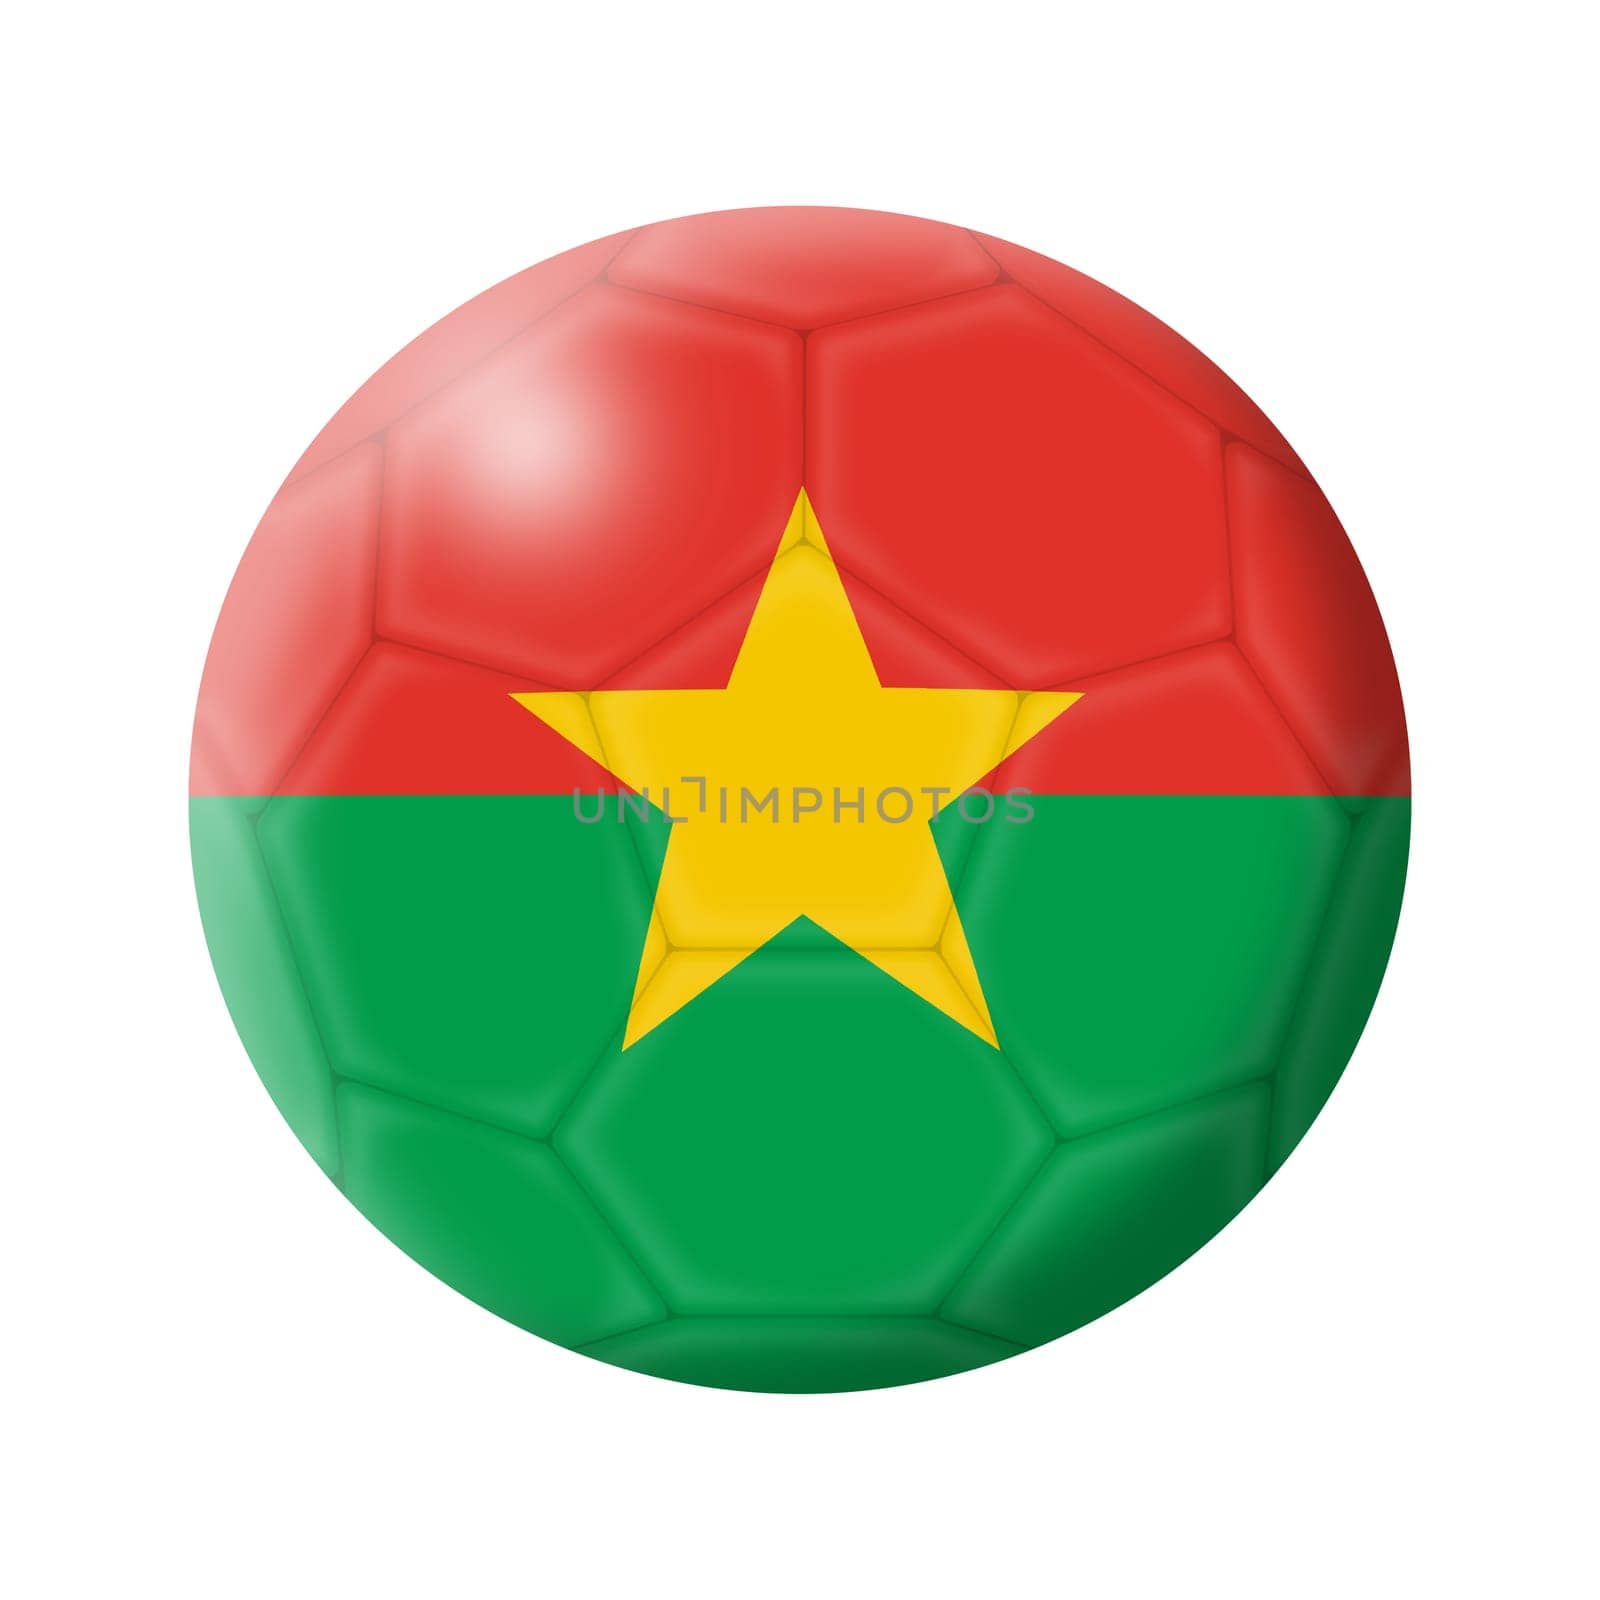 Burkina soccer ball football 3d illustration by VivacityImages